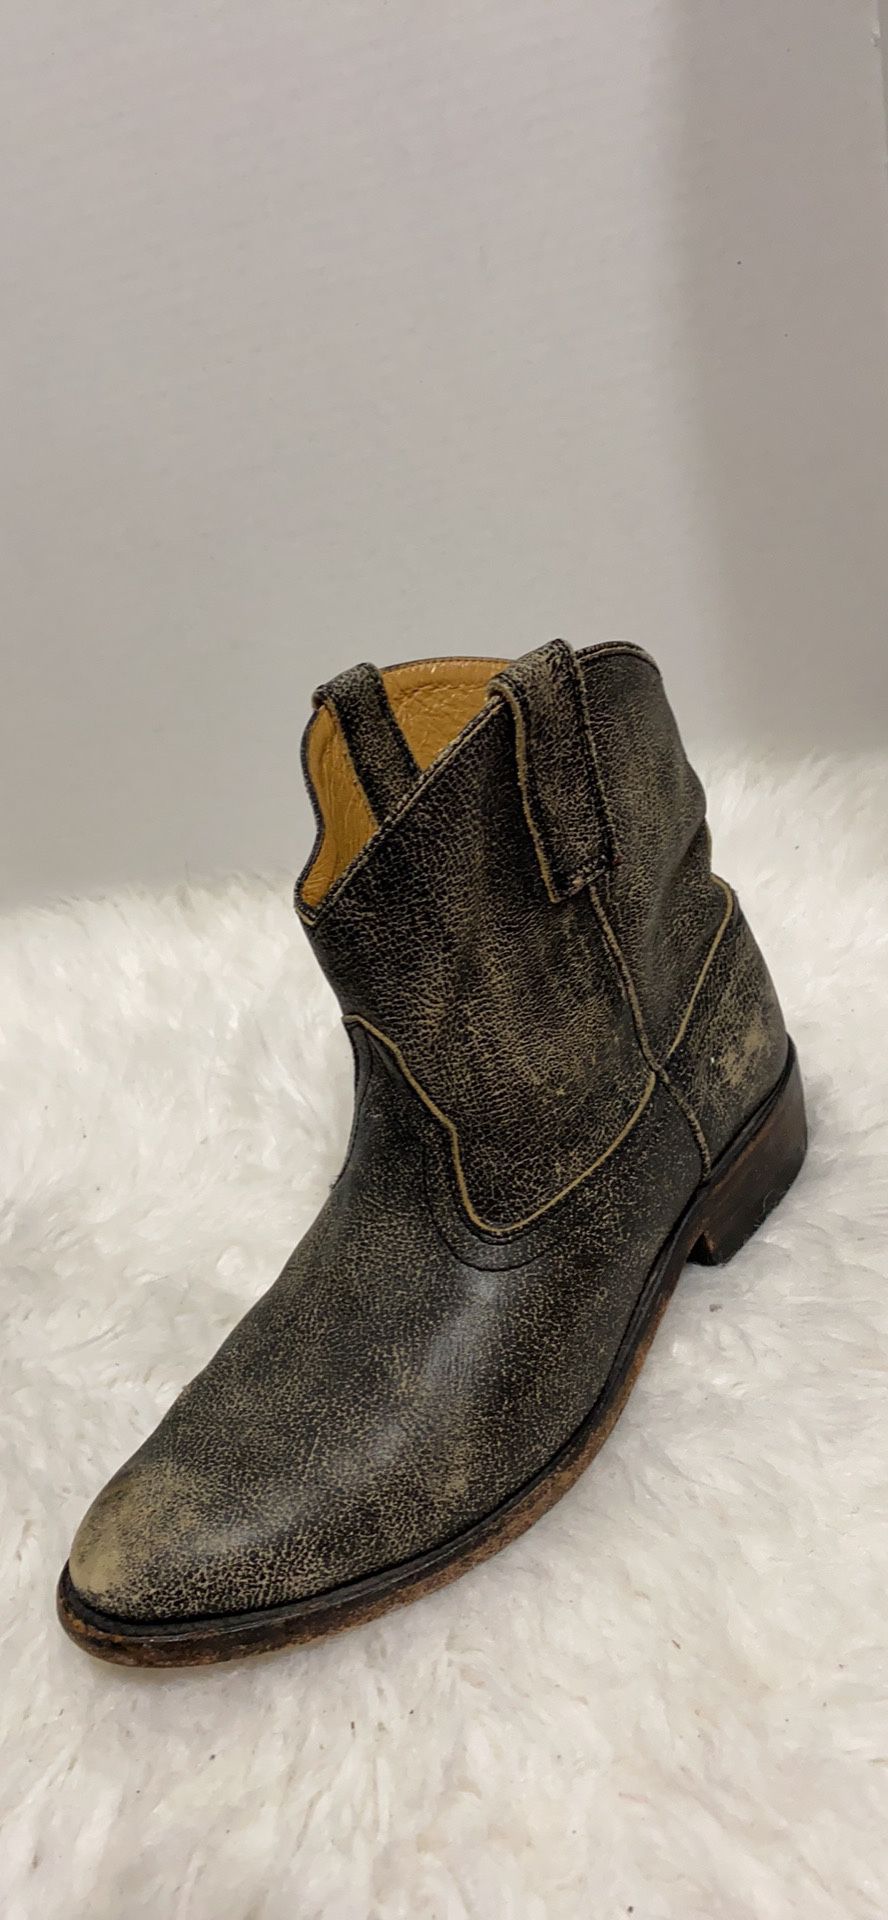 Aldo Destress women short western boots size 38-7-7.5